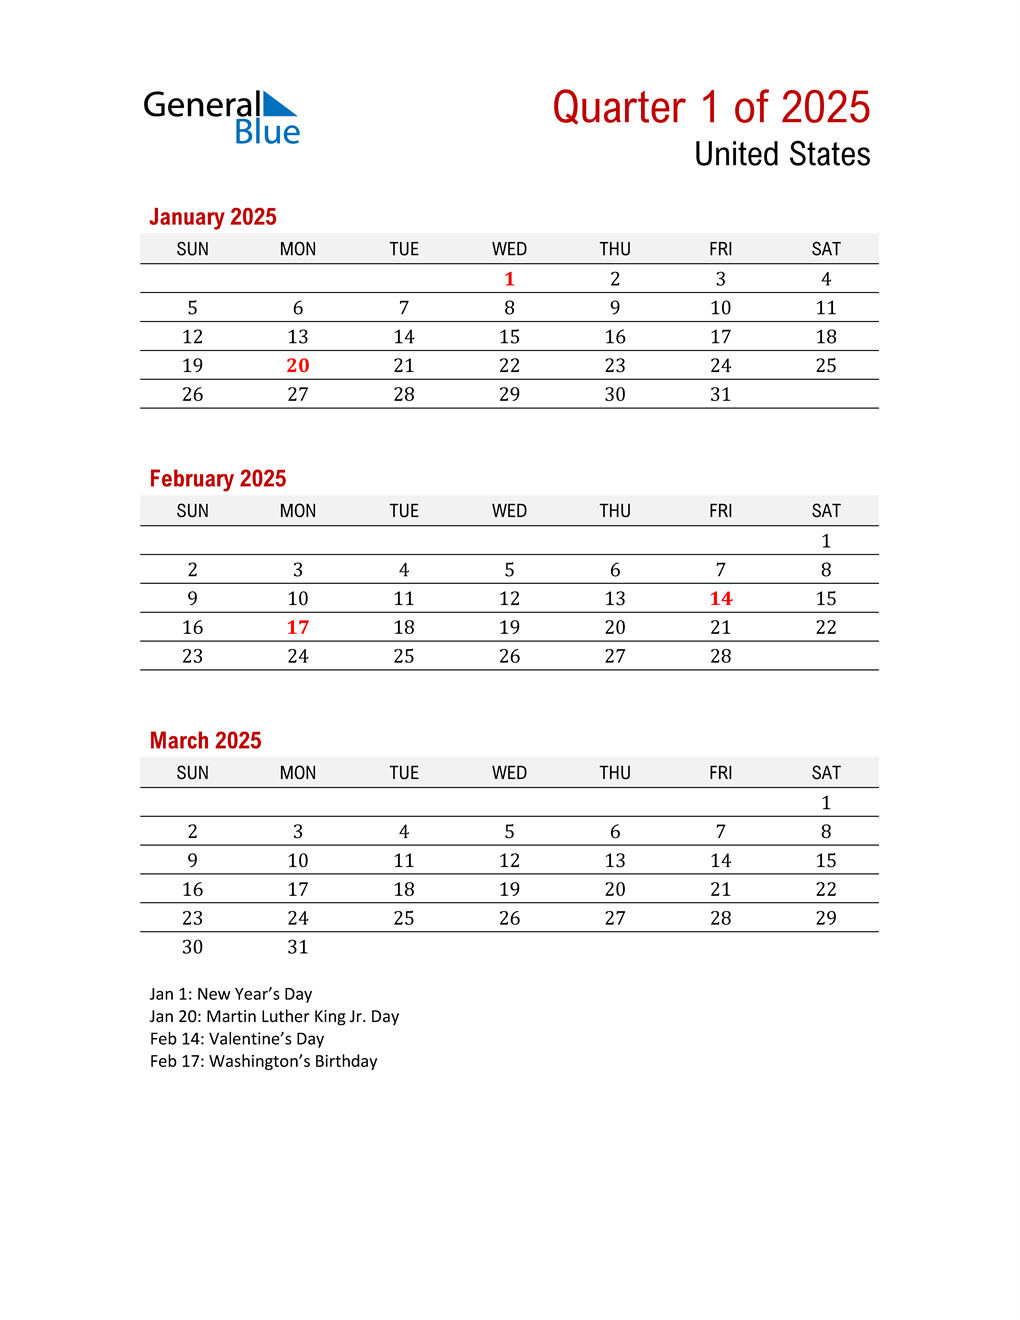 Q1 2025 Quarterly Calendar with United States Holidays